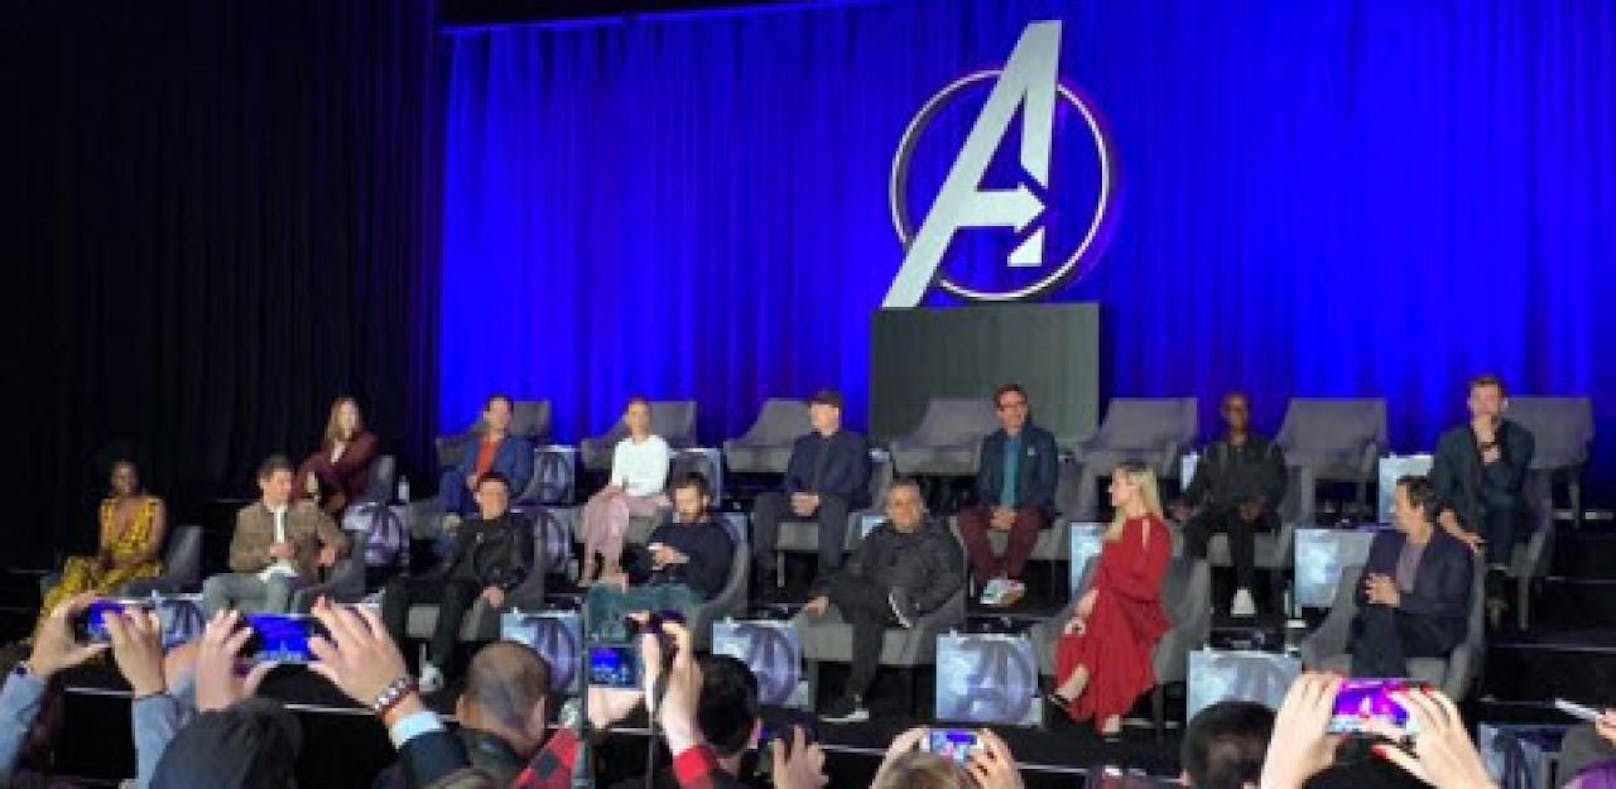 Leere Sitze beim Presse-Event der "Avengers"